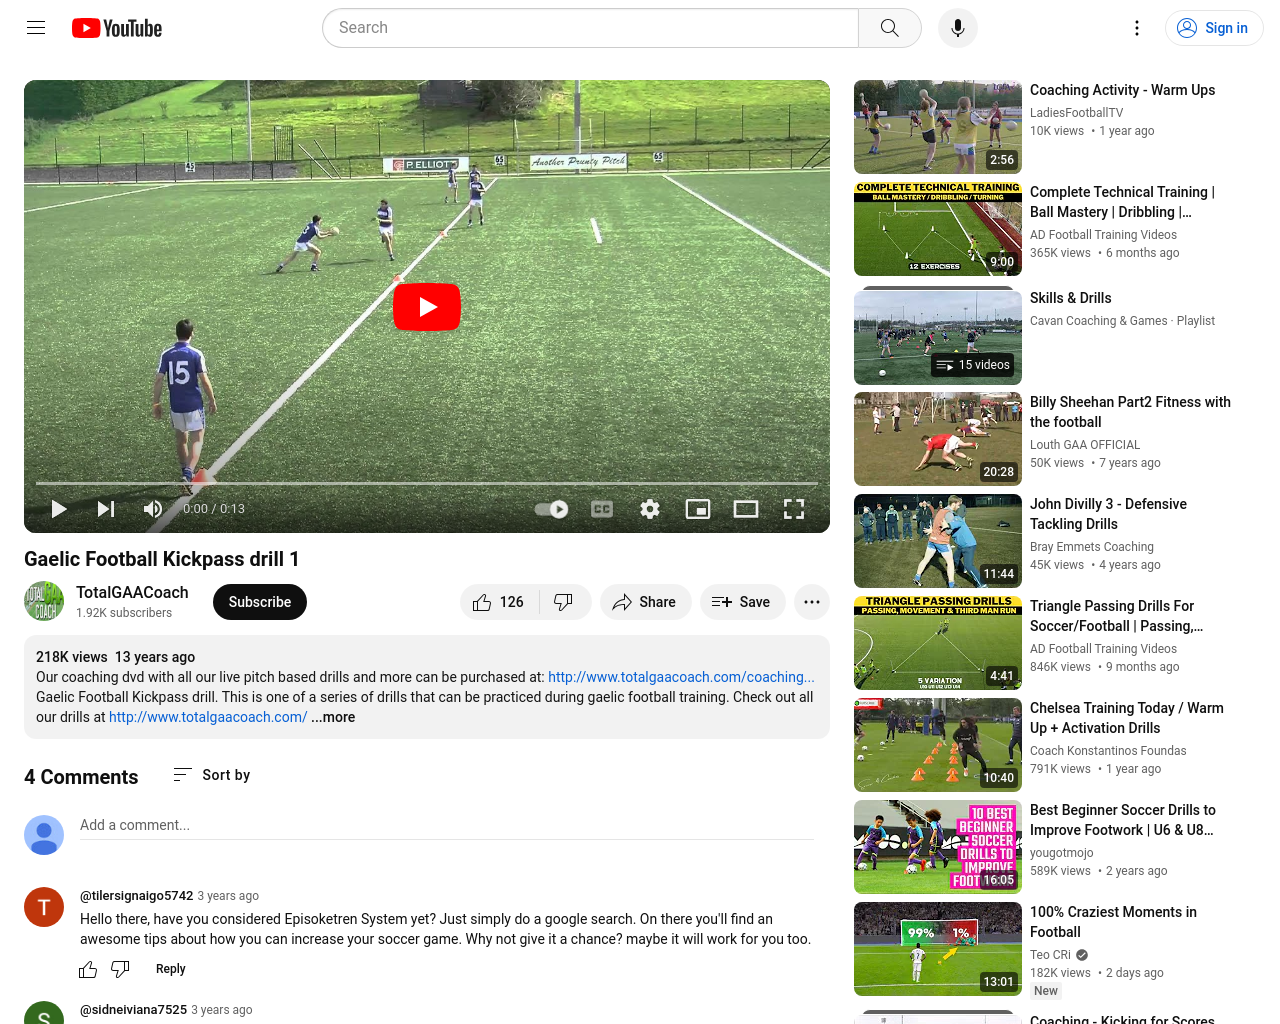 Gaelic Football Skills - Kick pass drill